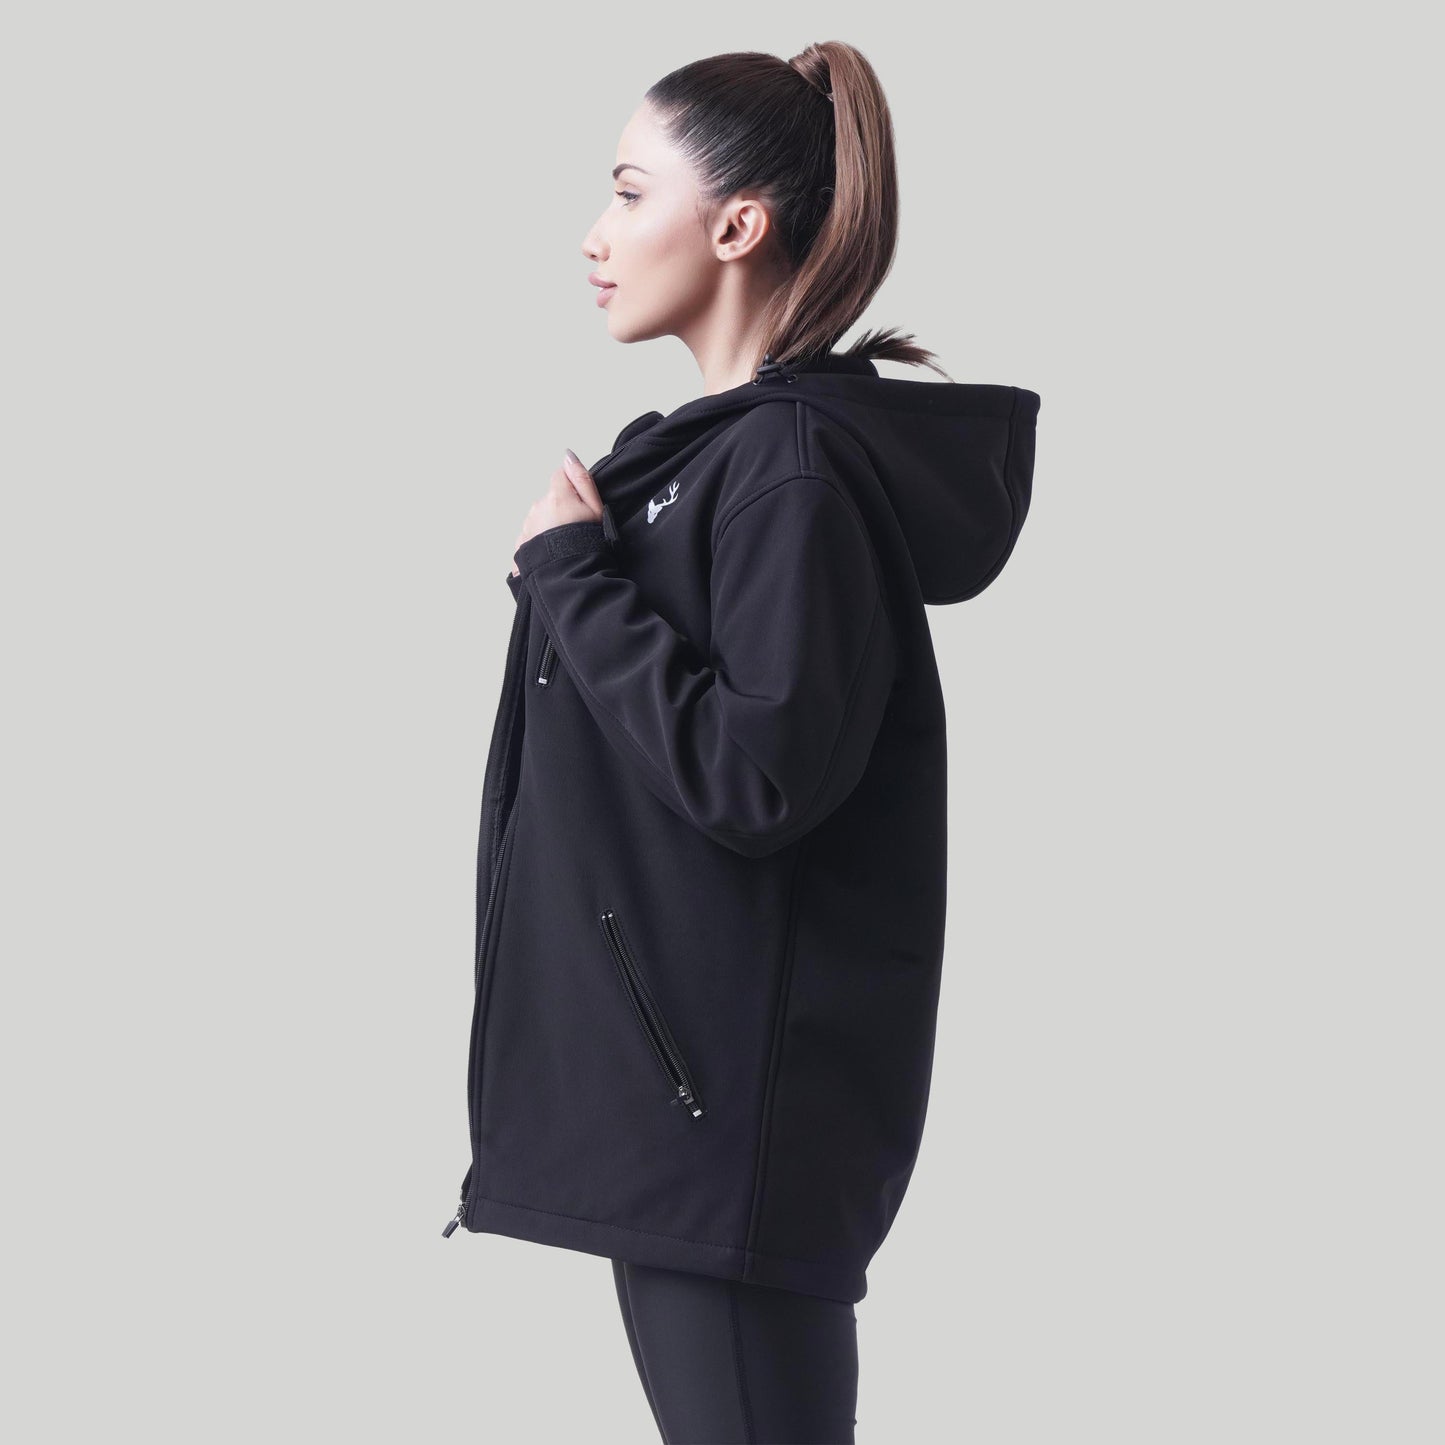 Stag Unisex SoftTech Jacket (Black)